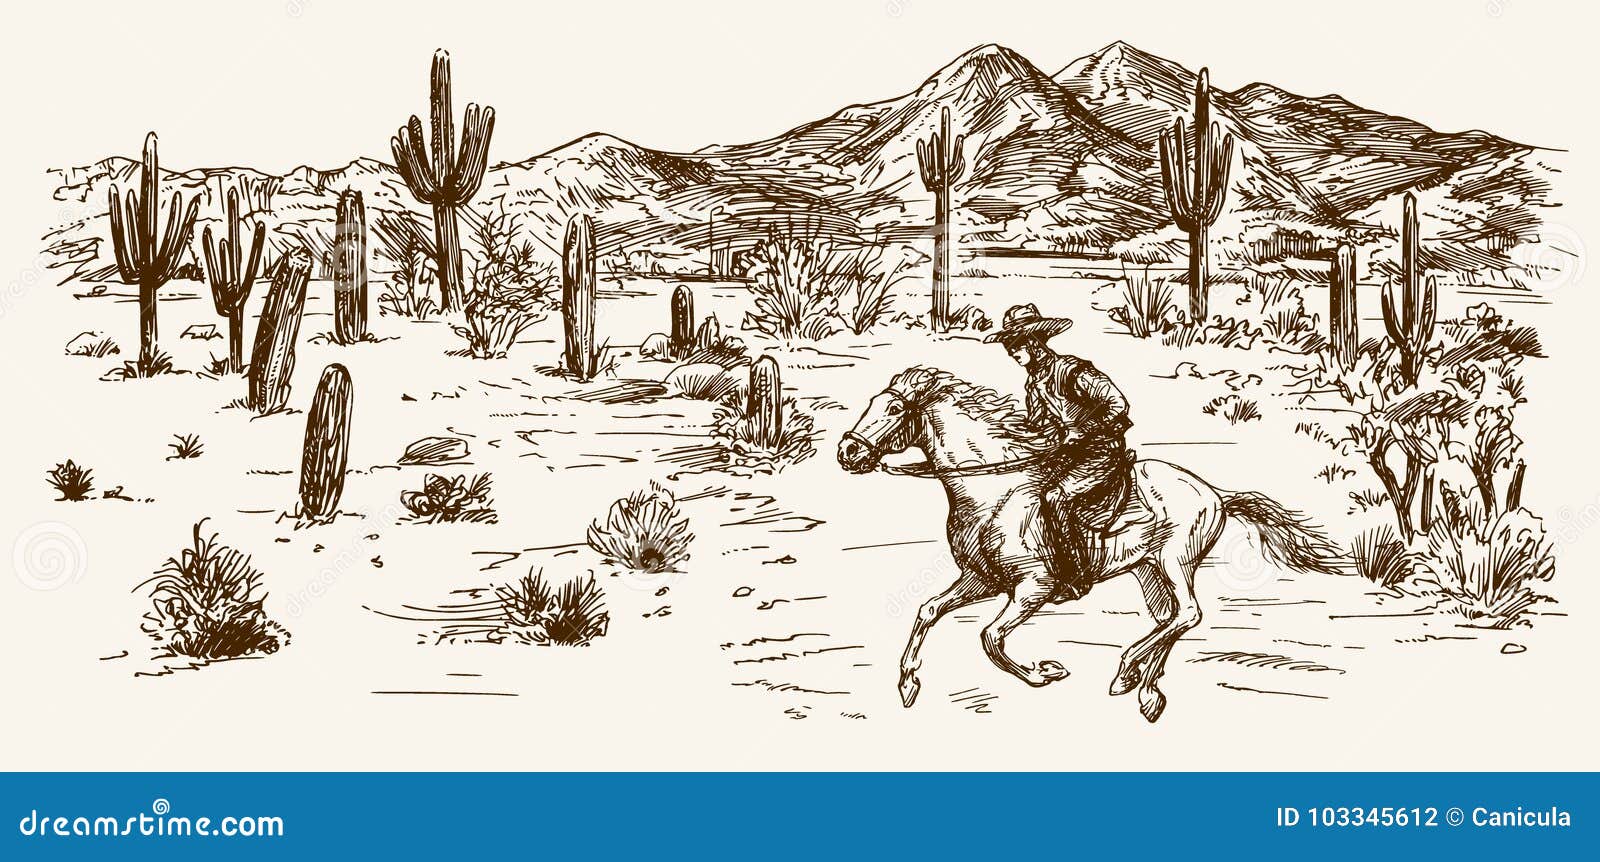 american wild west desert with cowboy